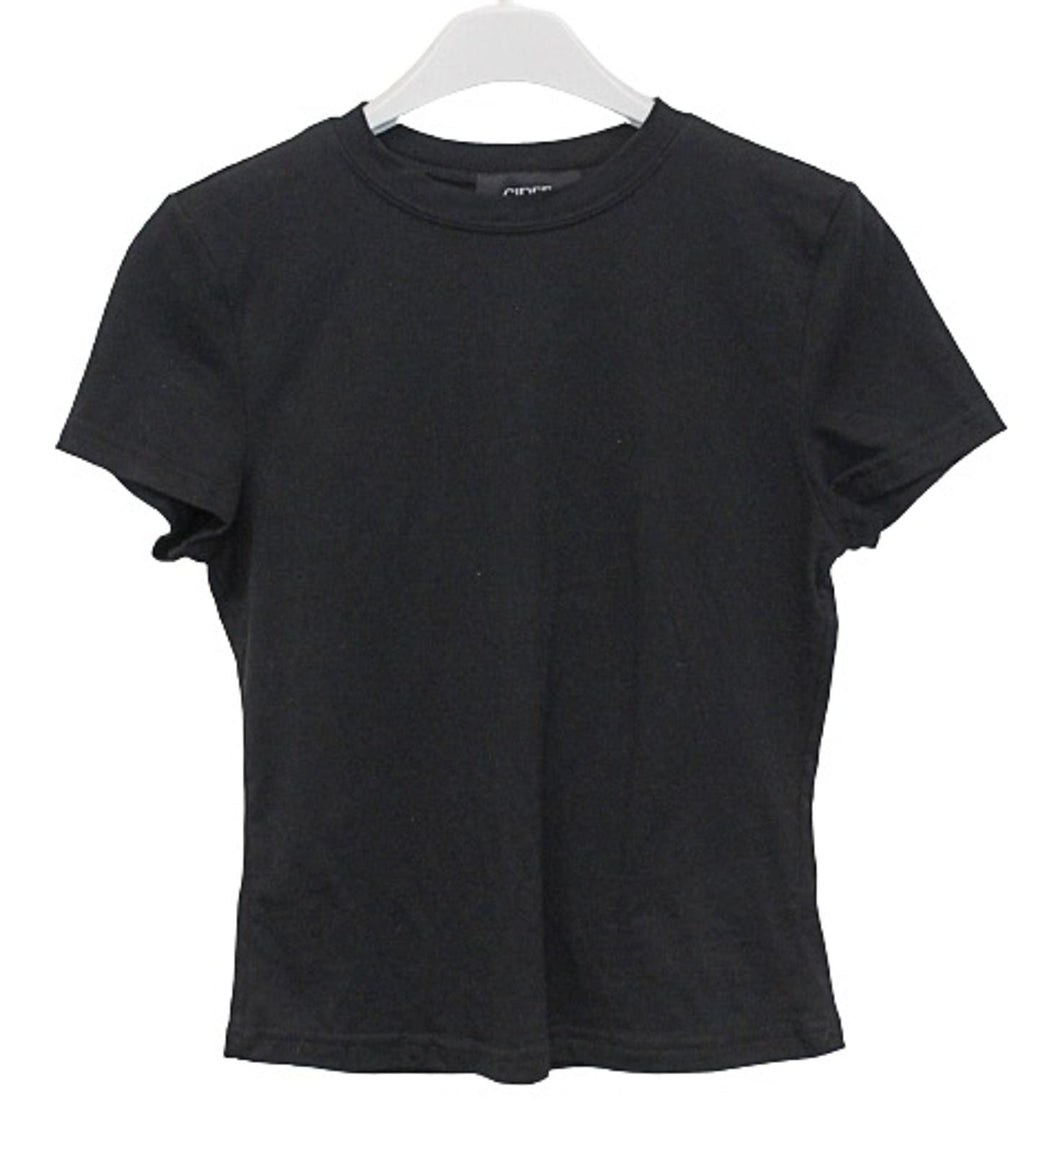 CIDER Girls Ladies Black Crew Neck Short Sleeve Plain Basic T-Shirt Size S